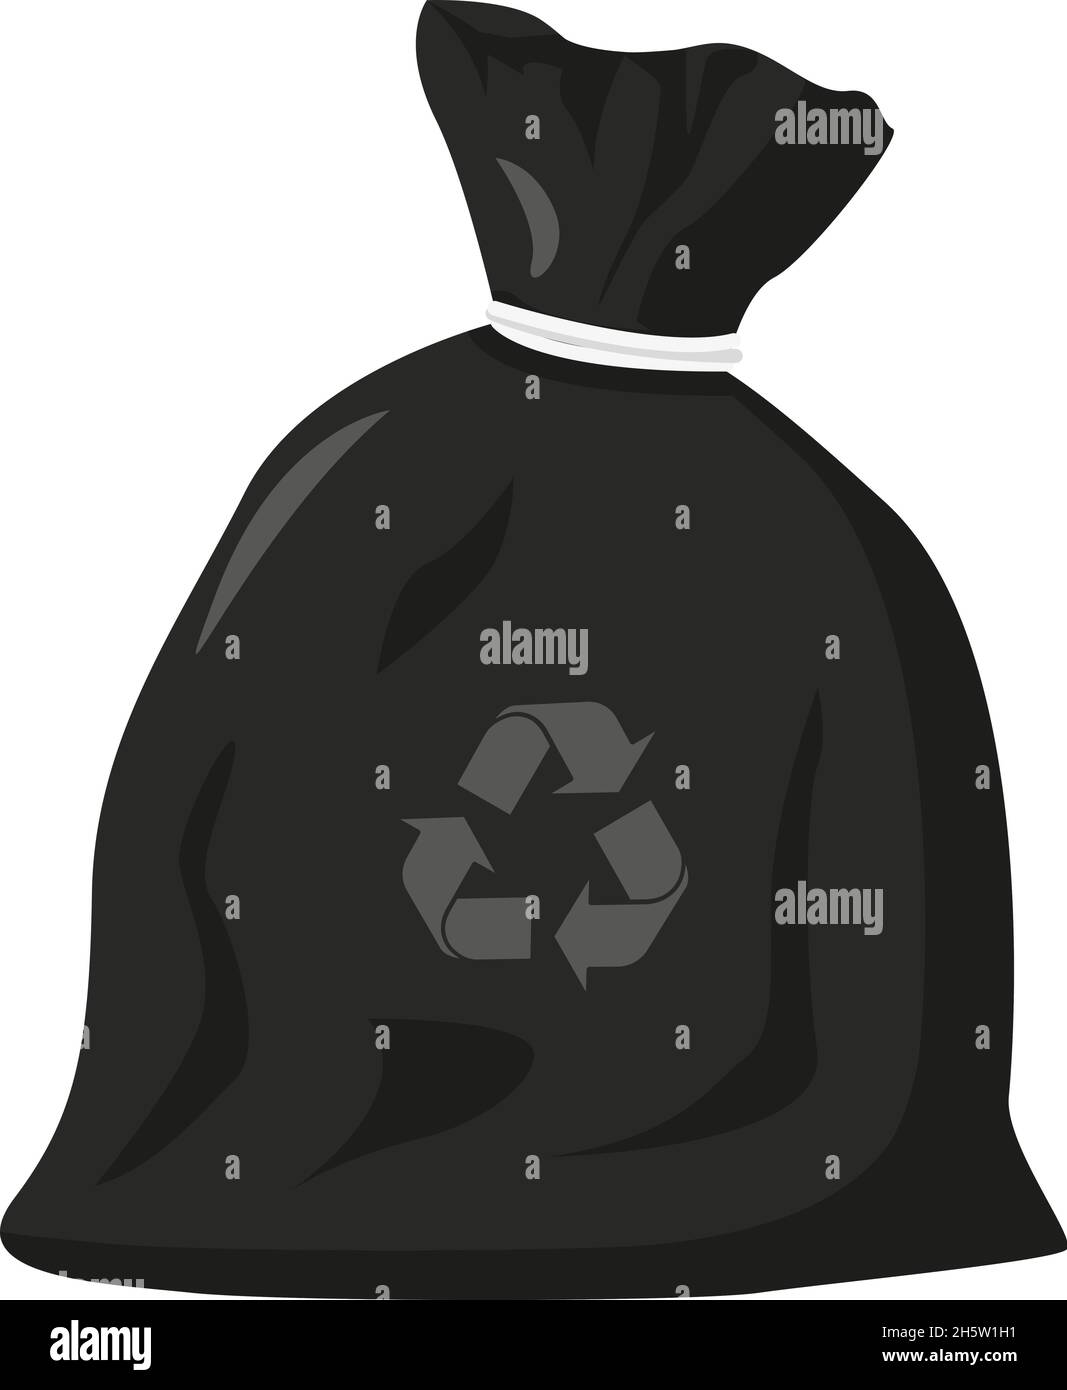 https://c8.alamy.com/comp/2H5W1H1/eco-friendly-trash-bag-in-flat-style-vector-2H5W1H1.jpg